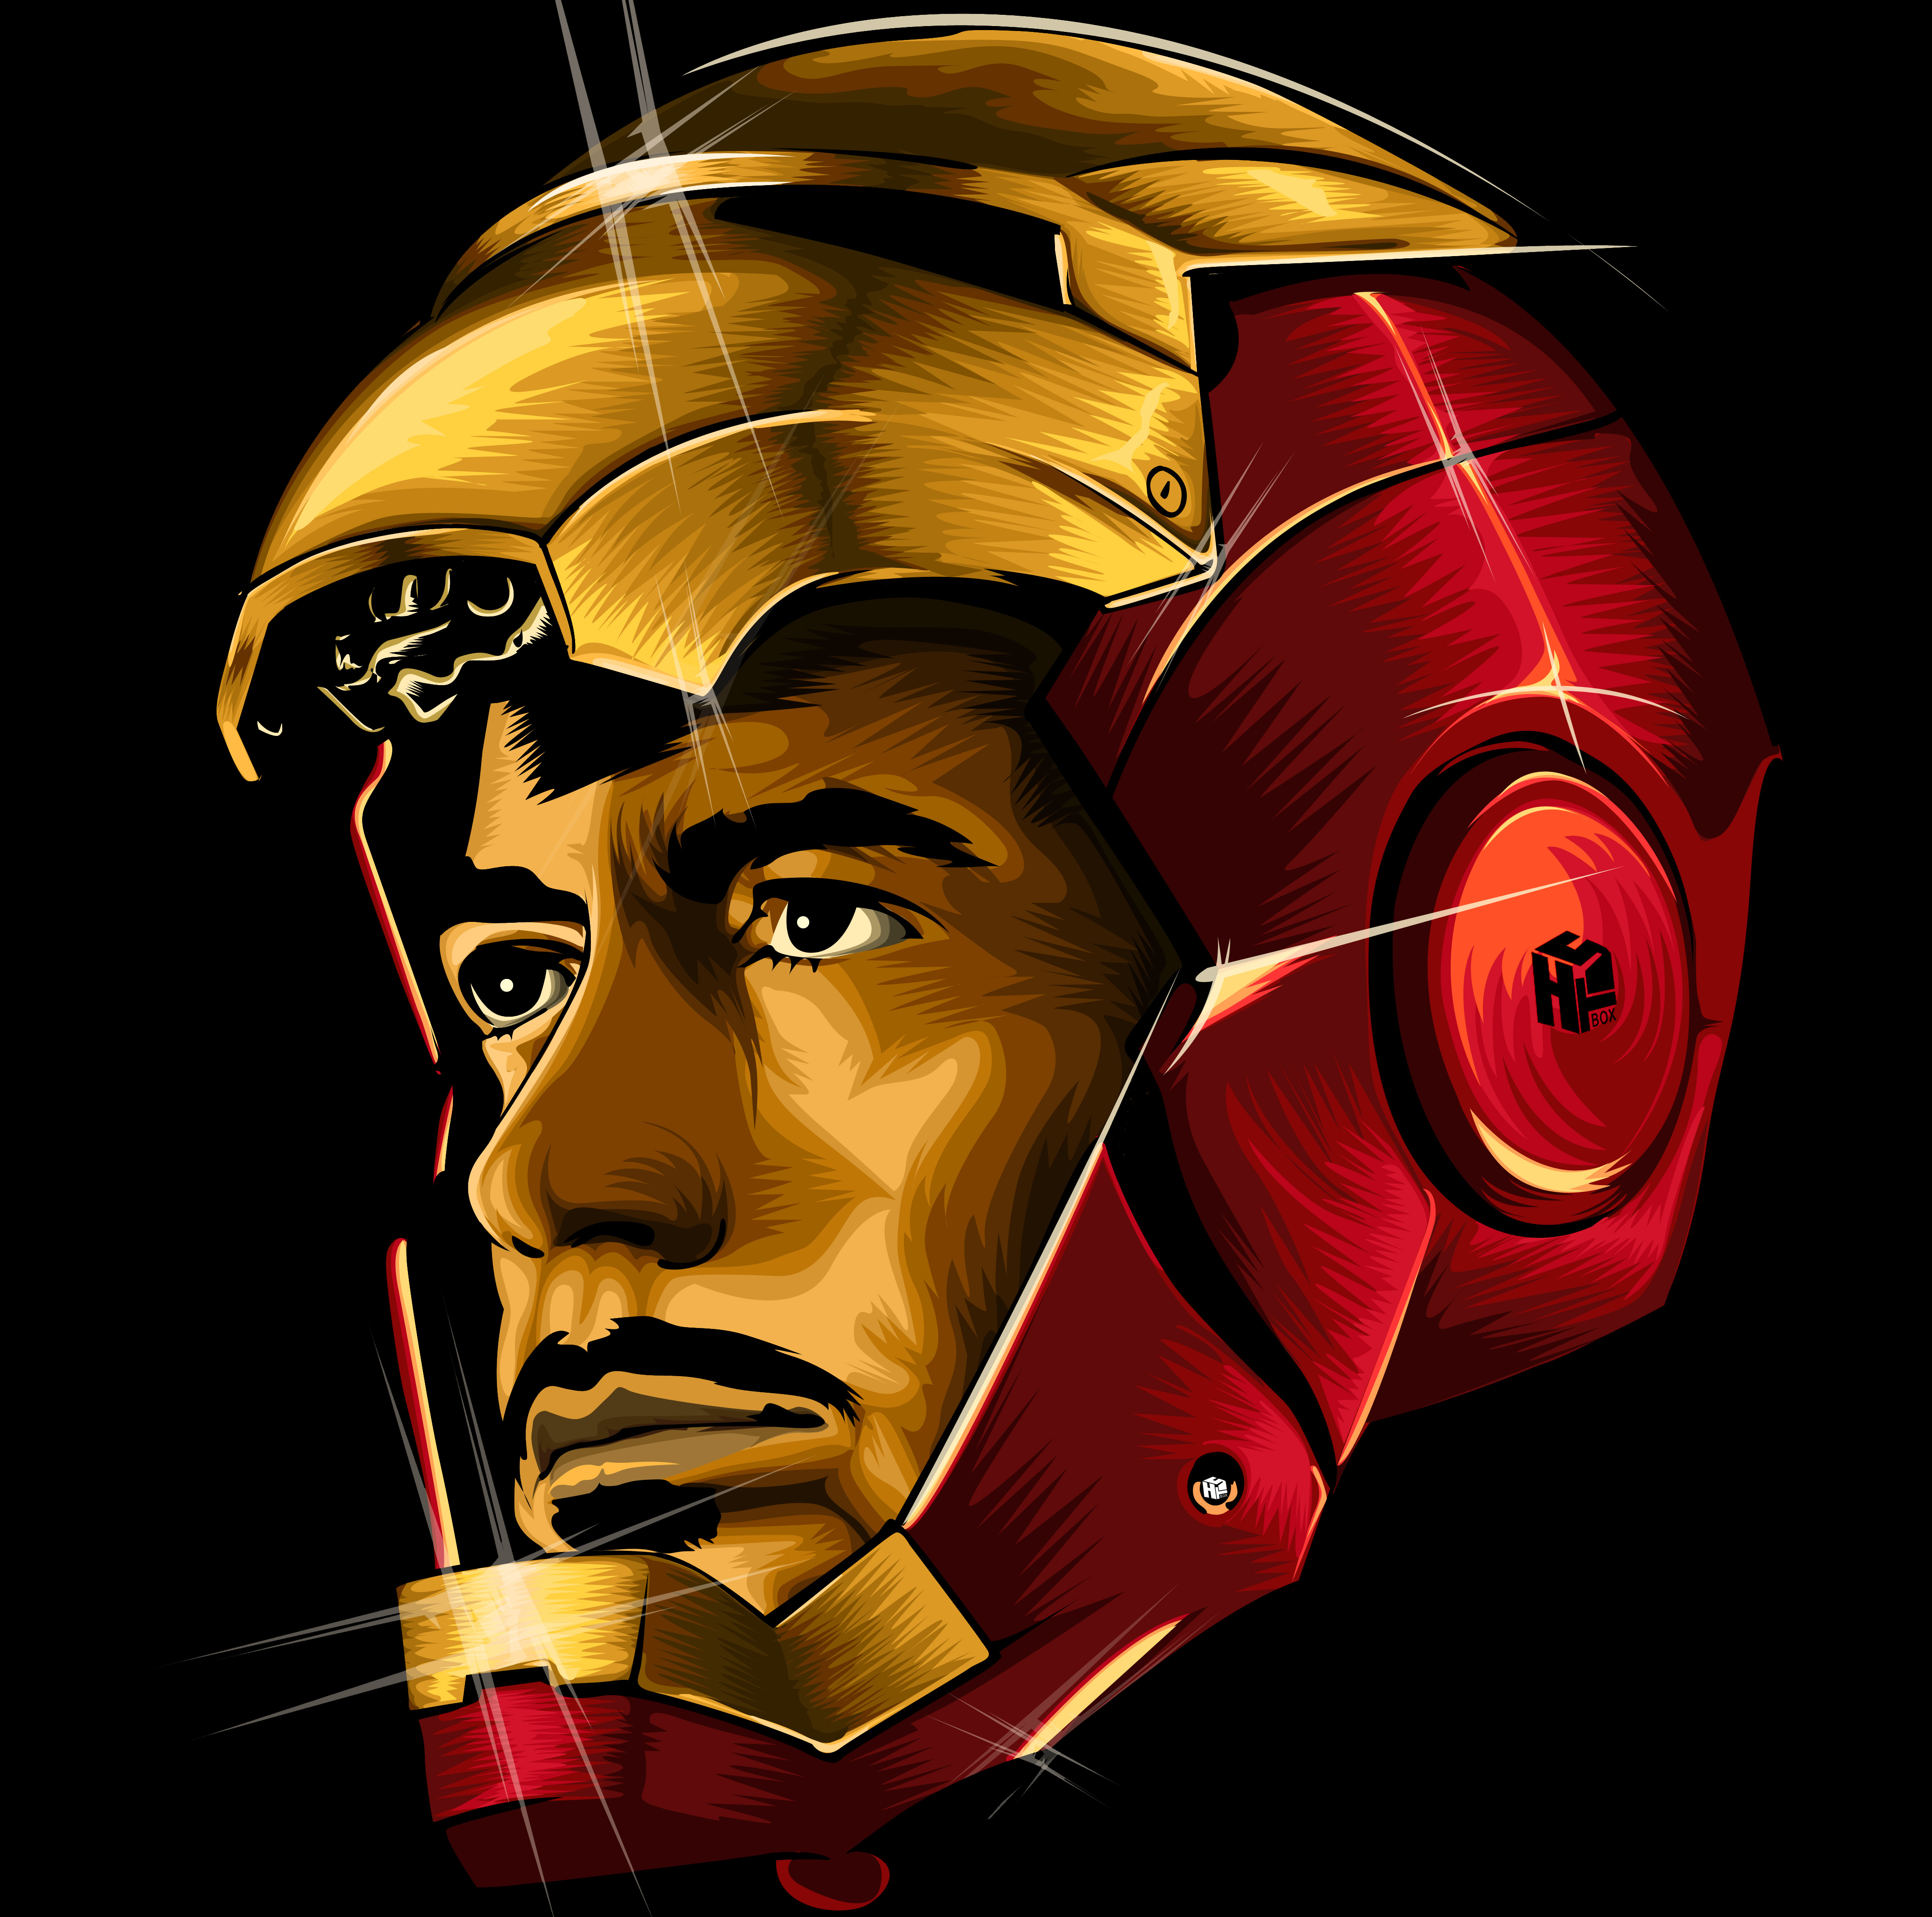 Iron Man Mask 5k, HD Superheroes, 4k Wallpapers, Images ...